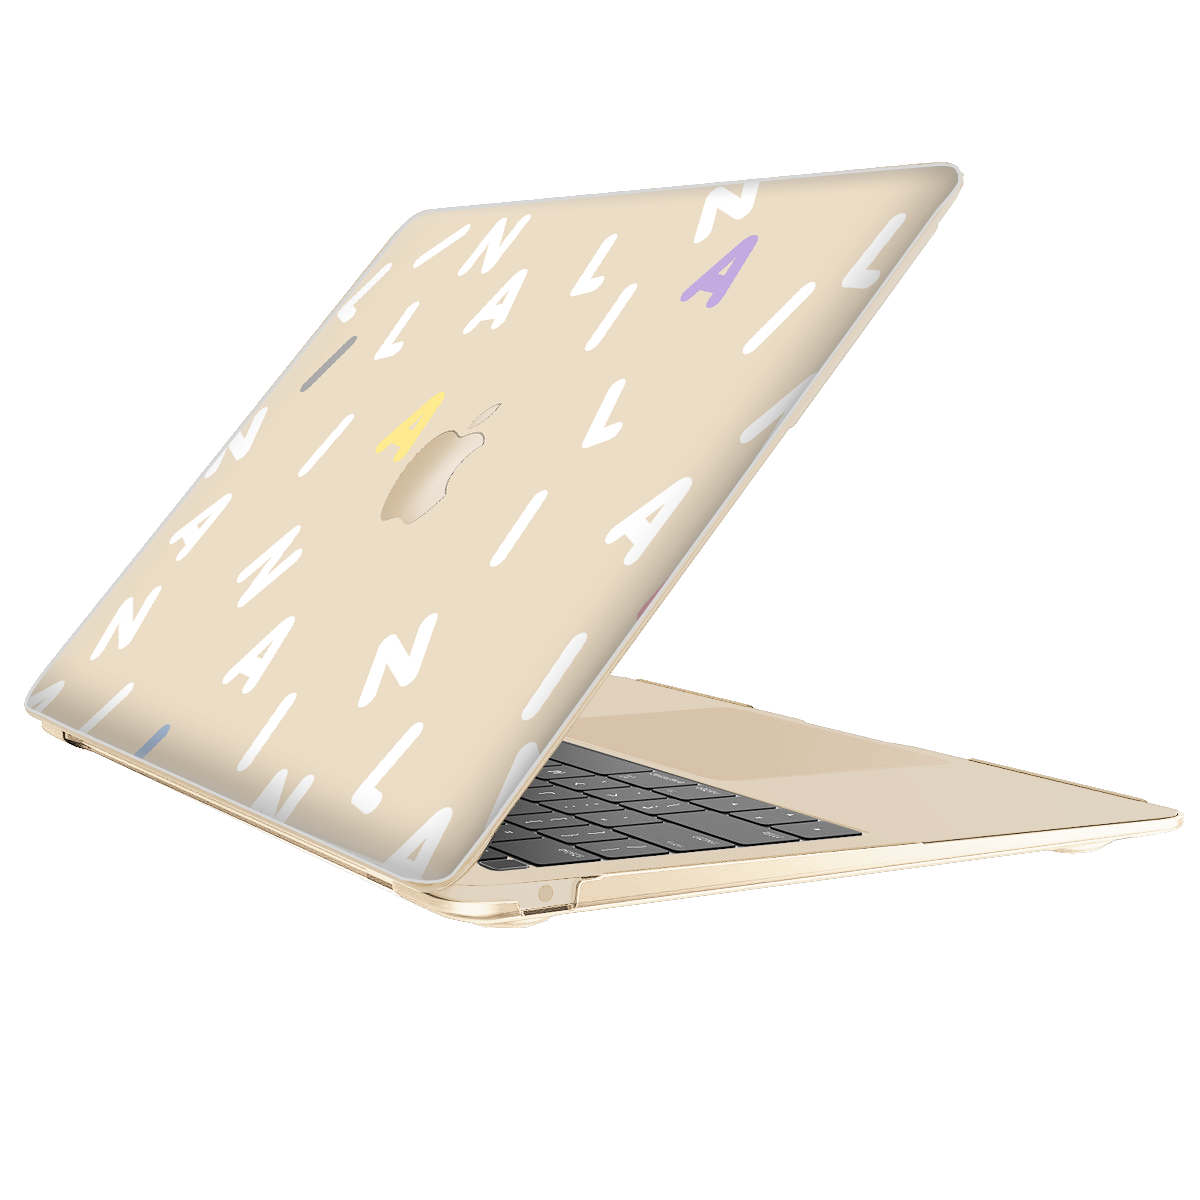 Macbook Snap Case - CUSTOM MONOGRAM 2.0 White